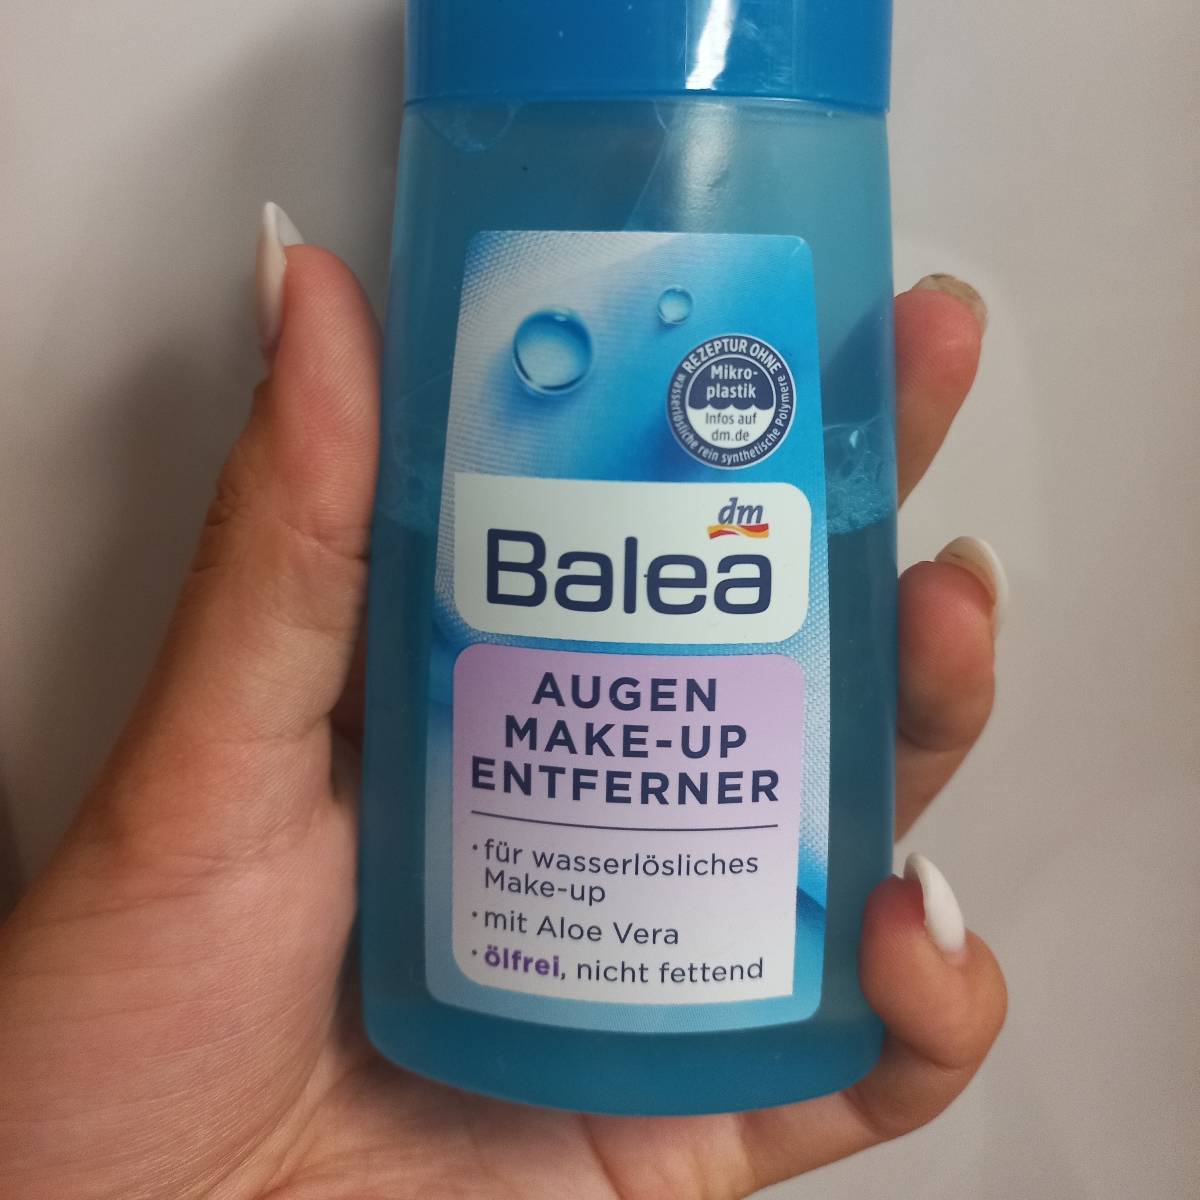 Balea Augen makeup entferner Reviews | abillion